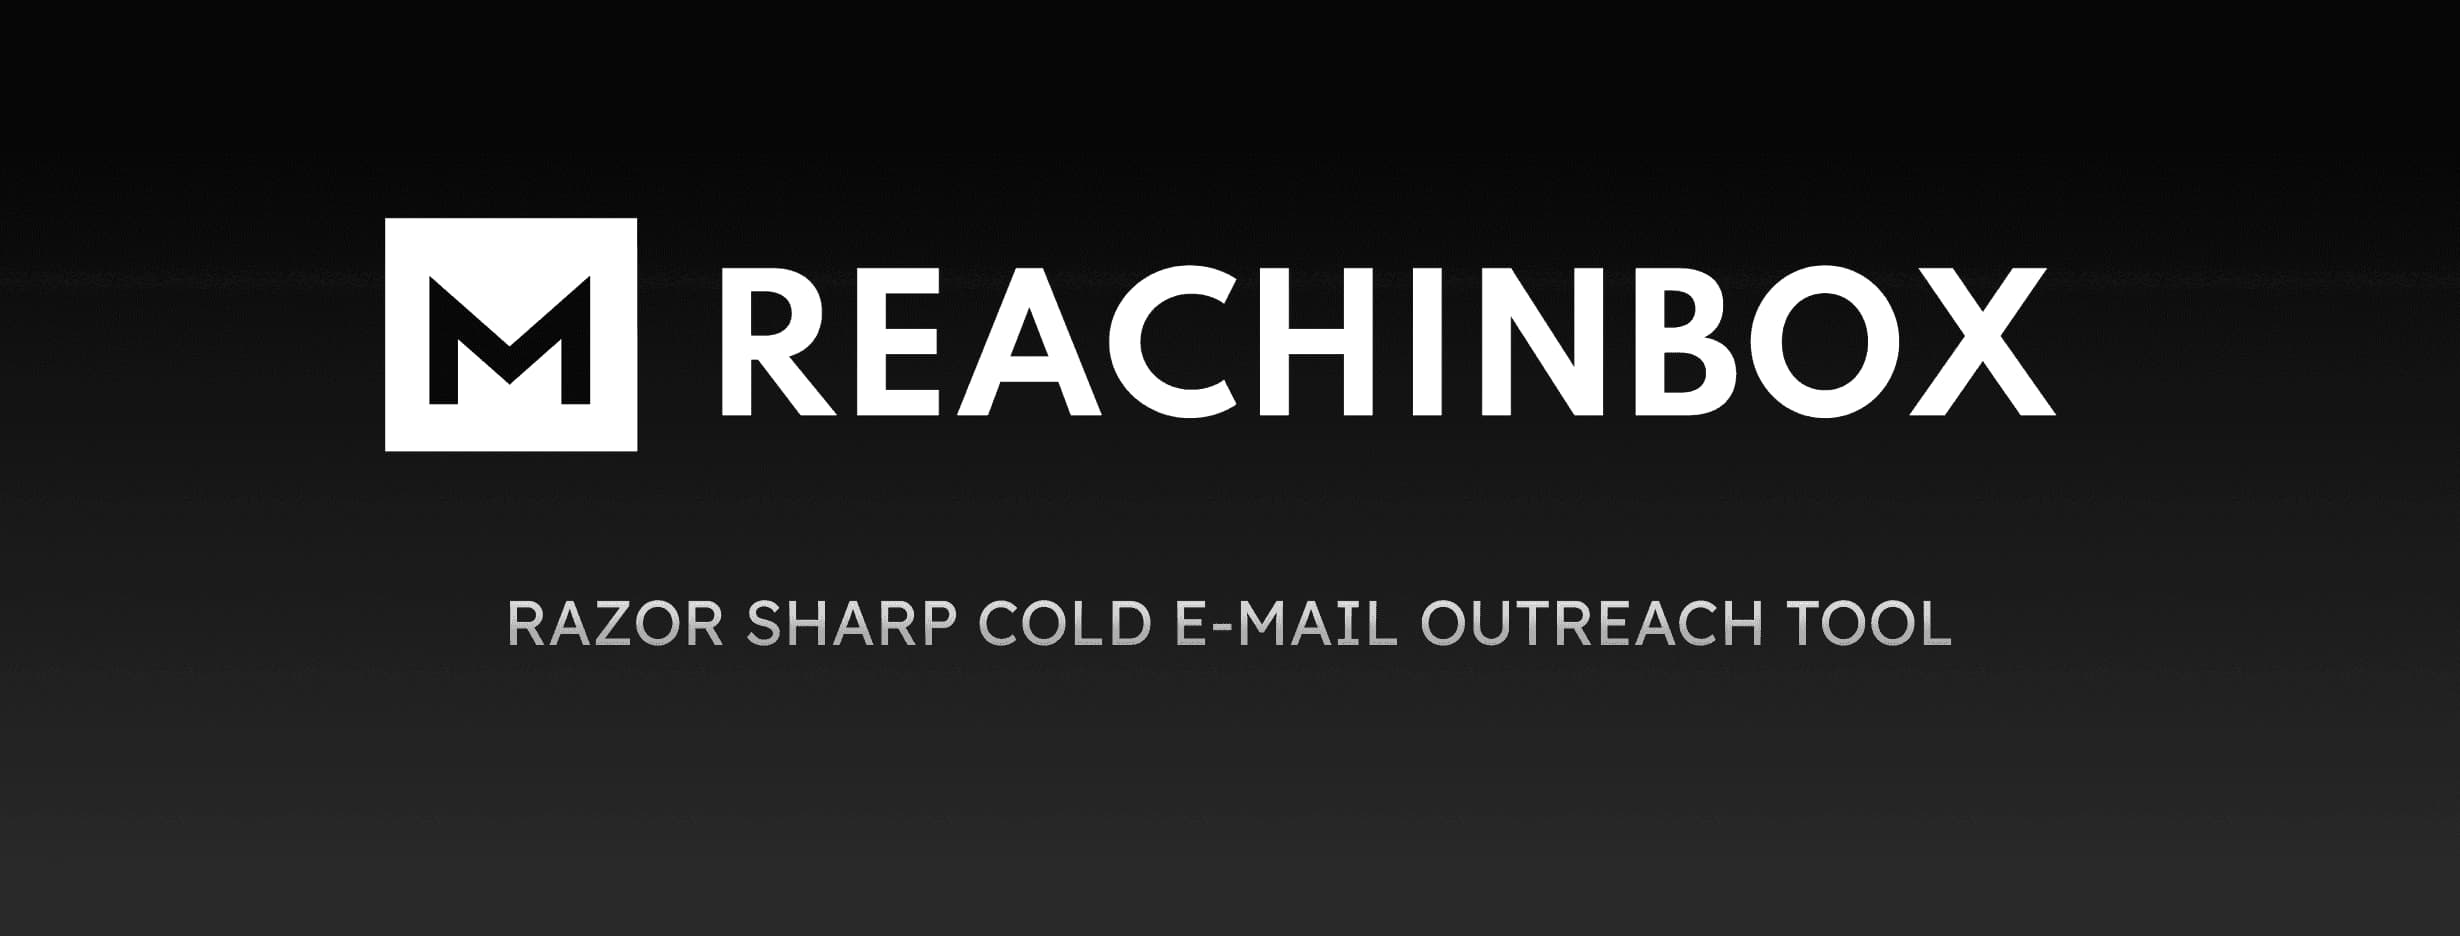 ReachInbox